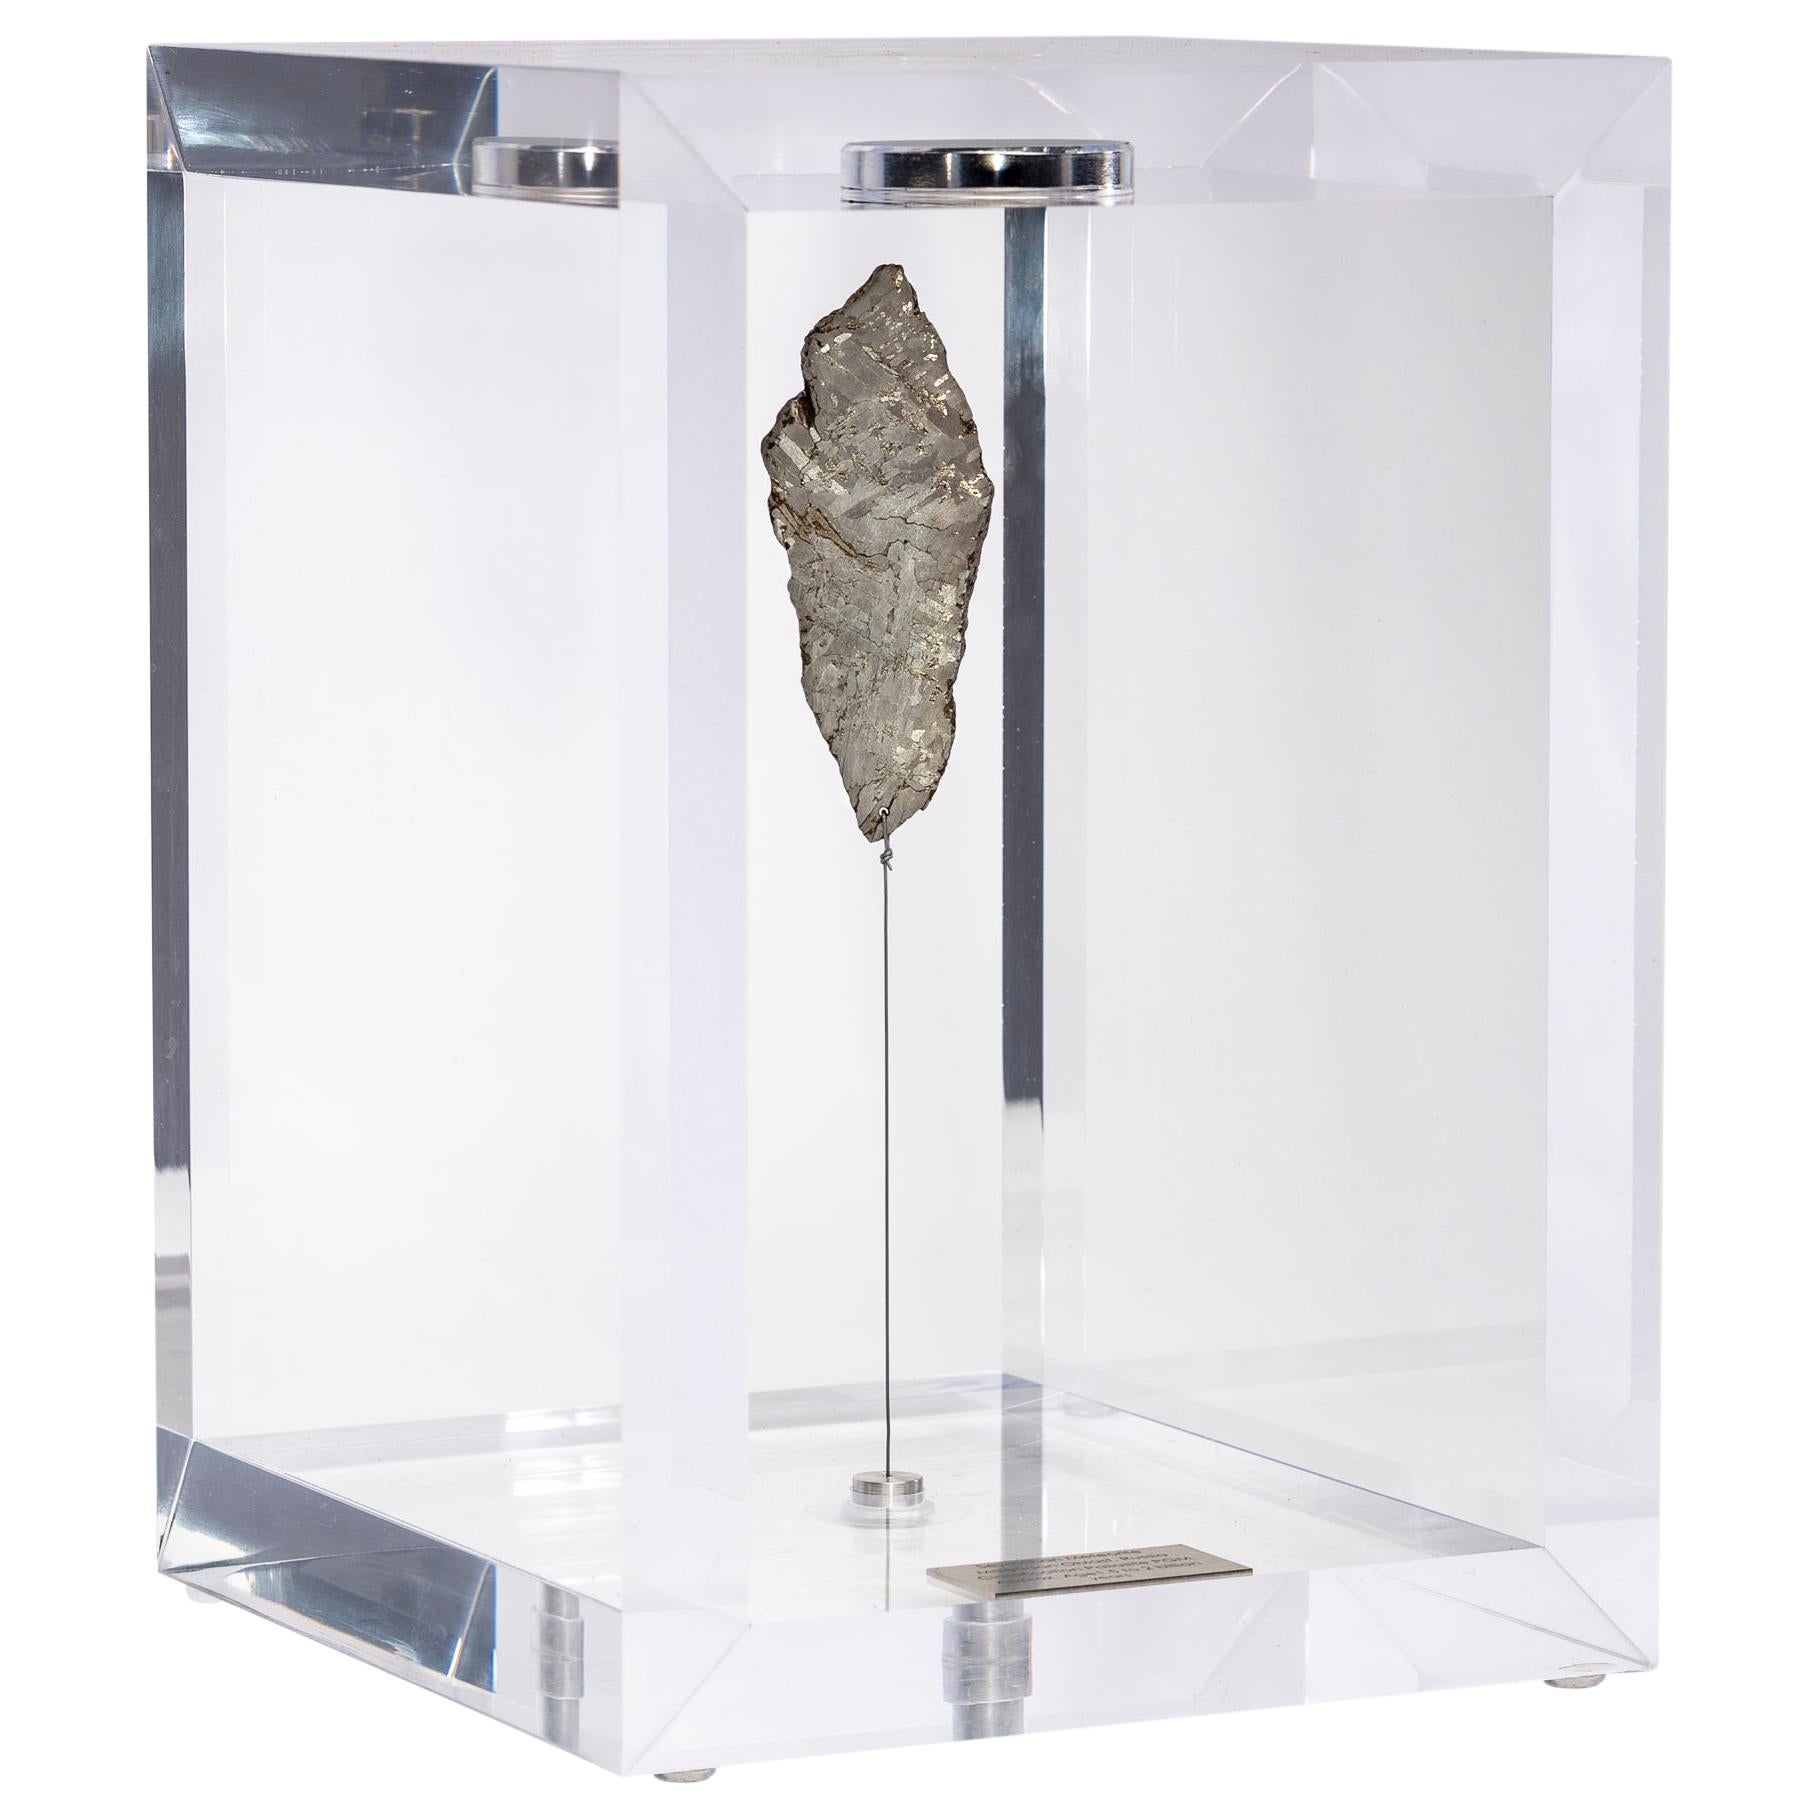 Original Design, Space Box, Gibeon Meteorite from Namibia in Acrylic Box